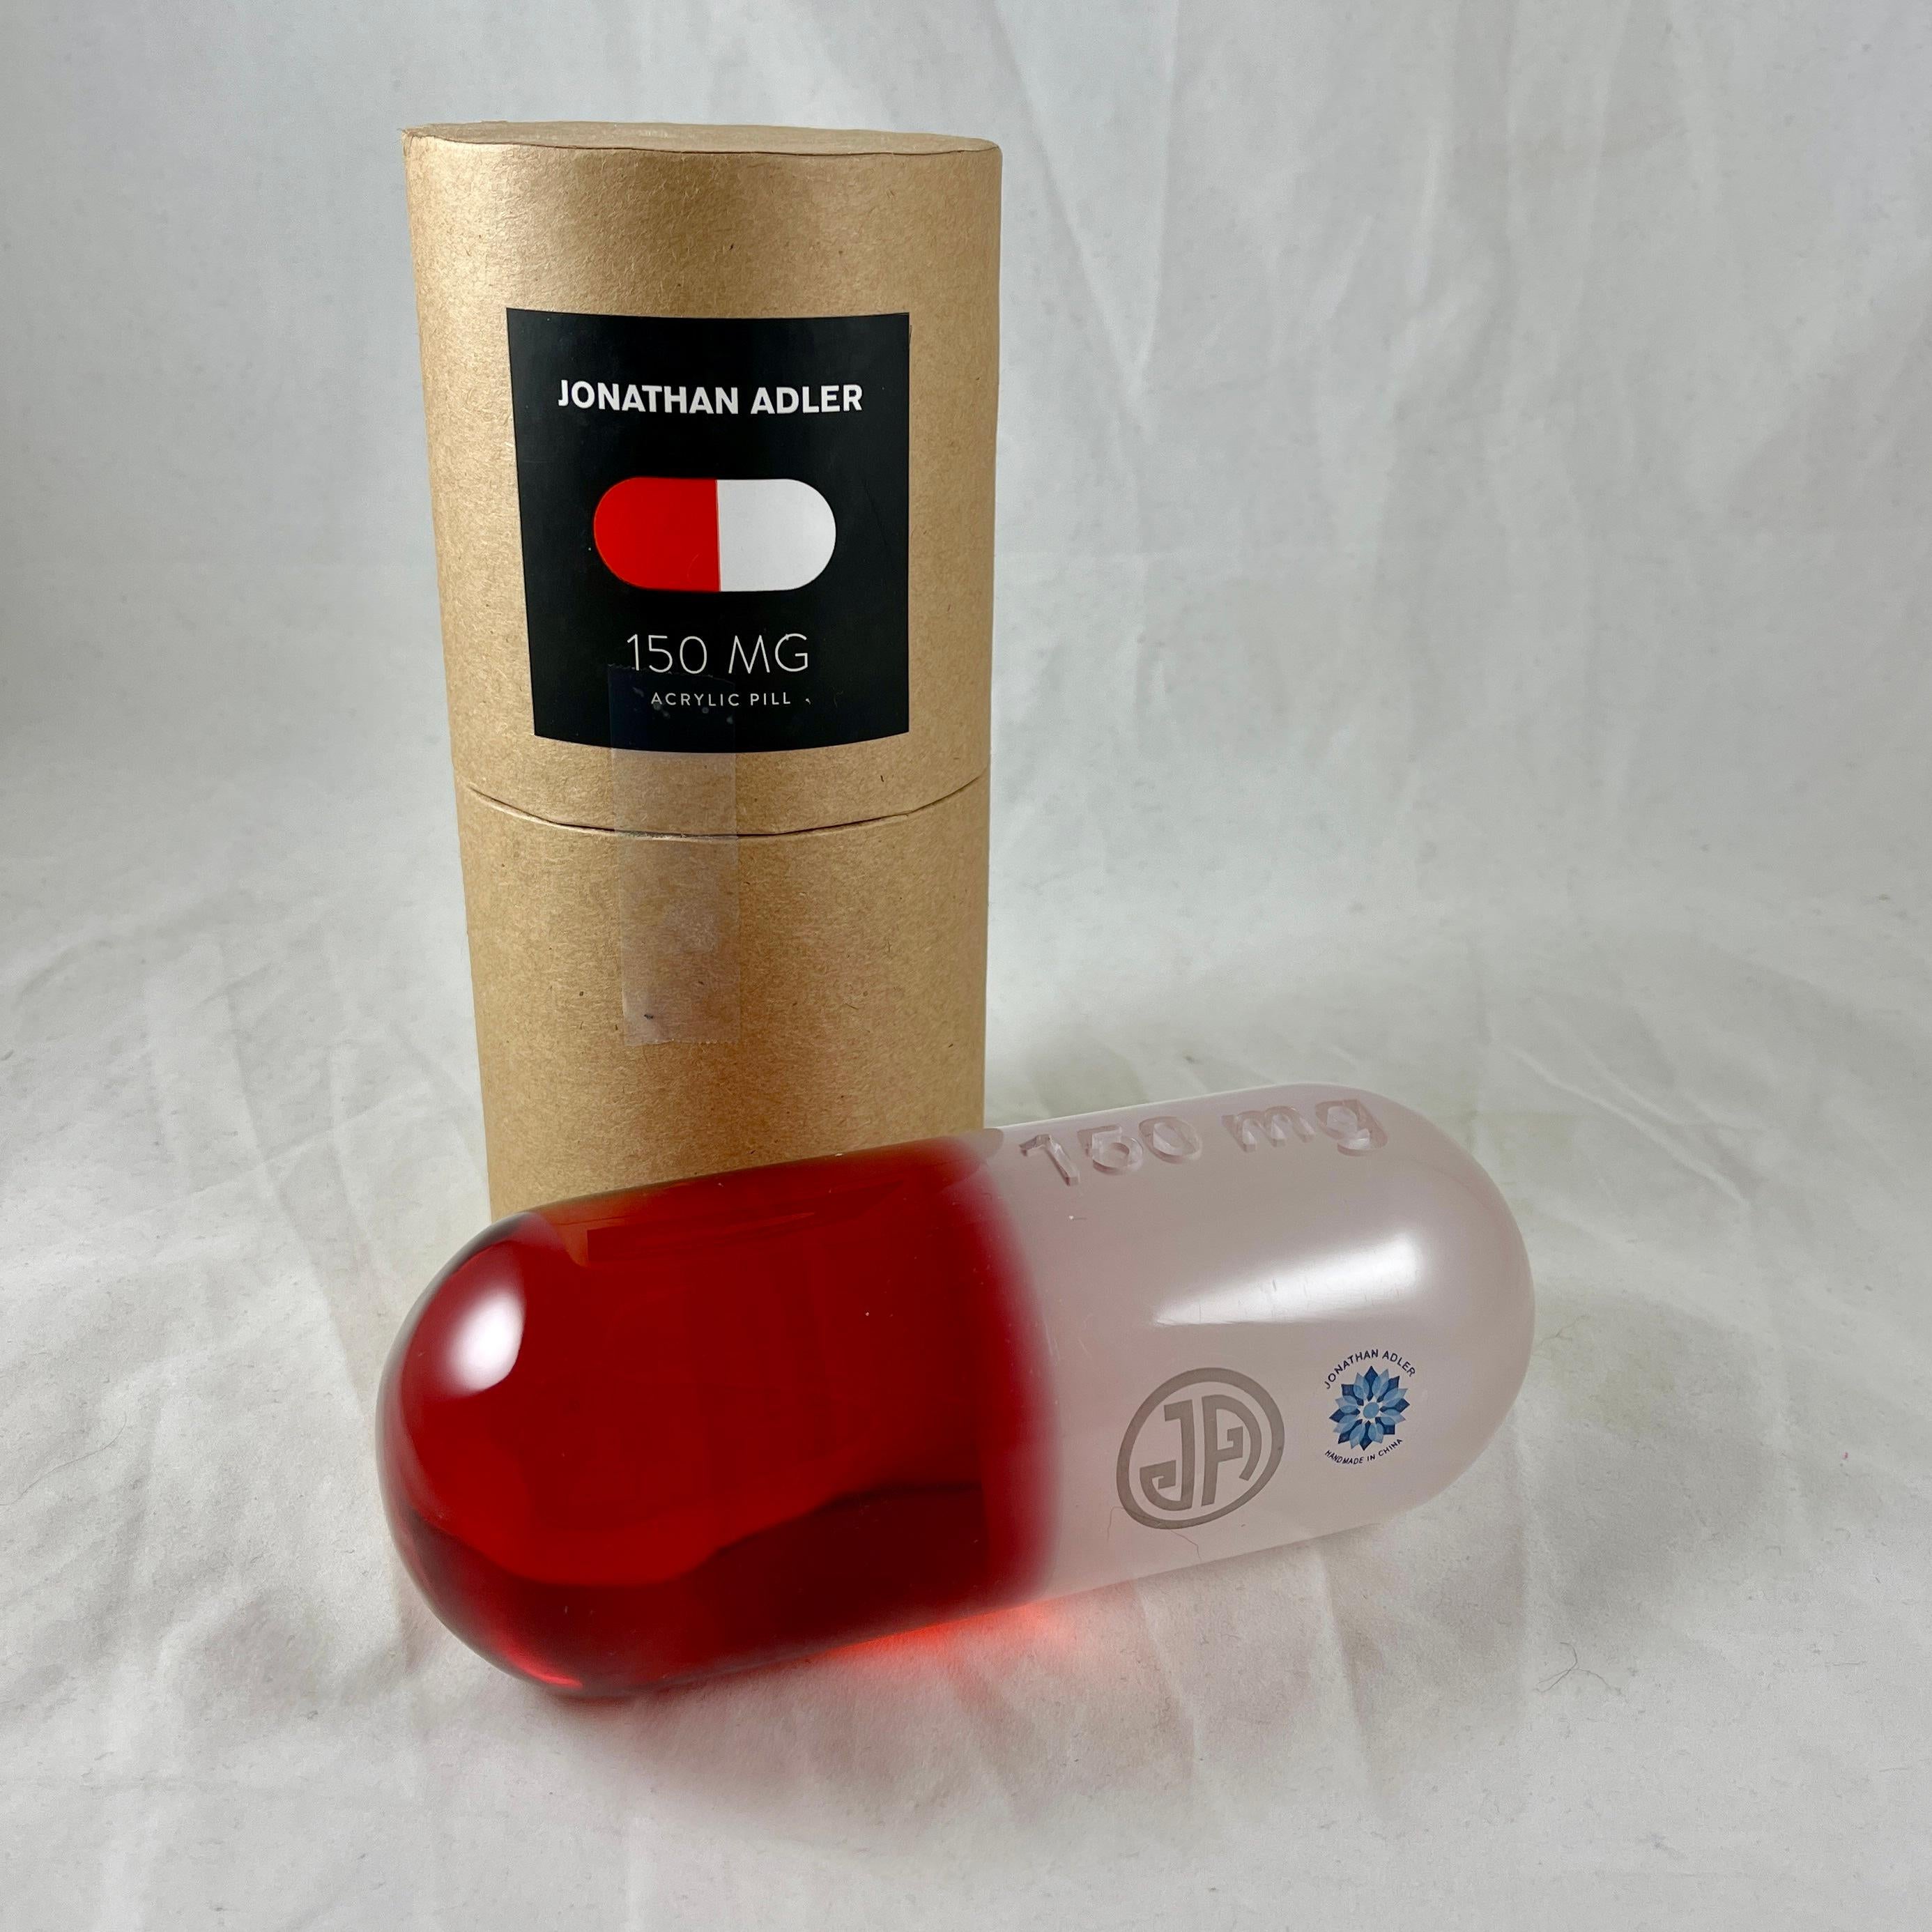 Molded Jonathan Adler Acrylic Pop Art Pill Sculpture, 150 MG Red For Sale